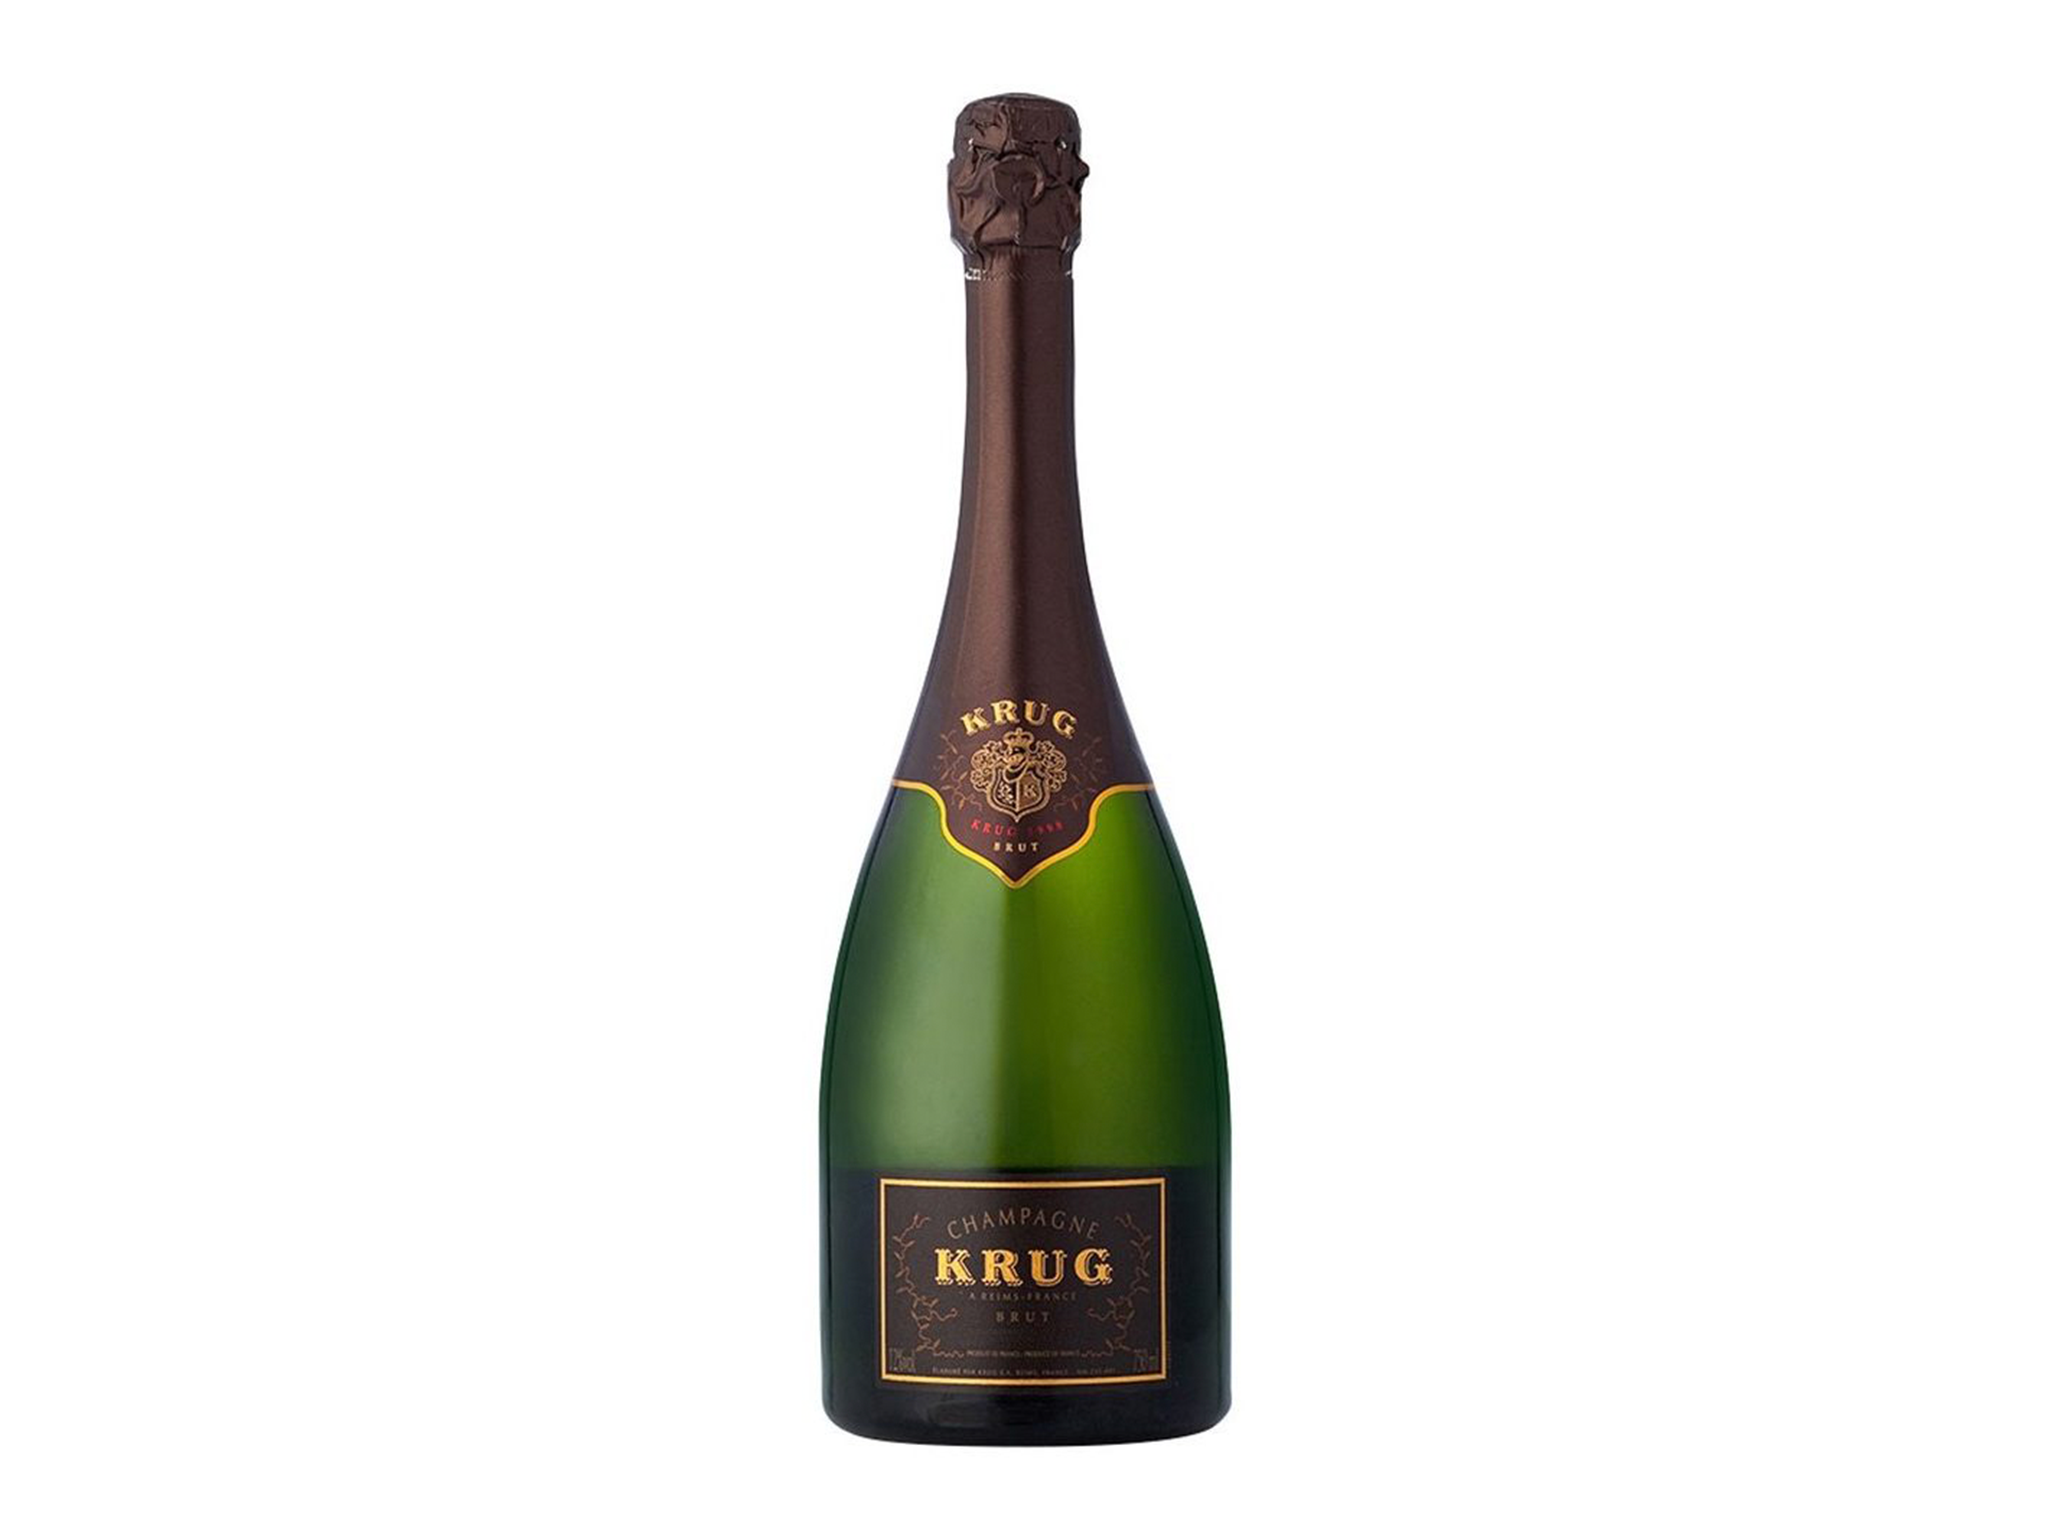 Krug champagne 2004